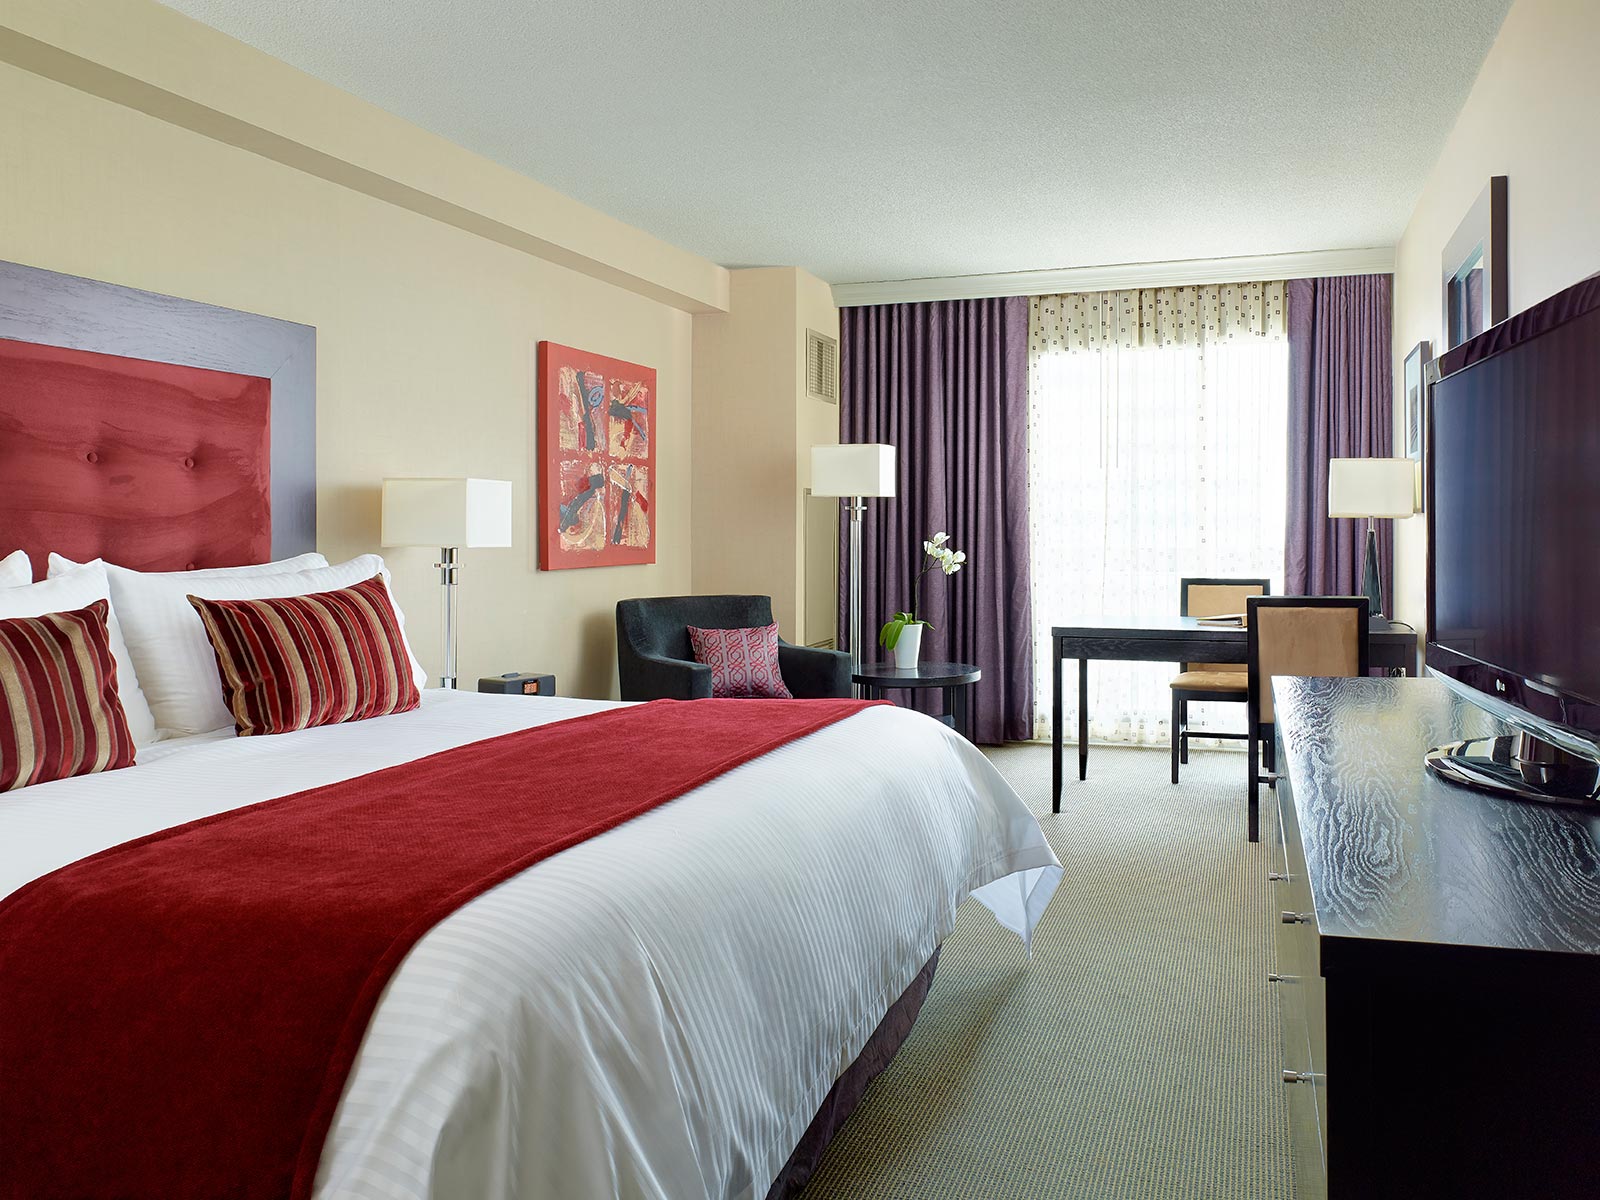 Club Room, Hotel Rooms & Suites in Chelsea Hotel, Toronto